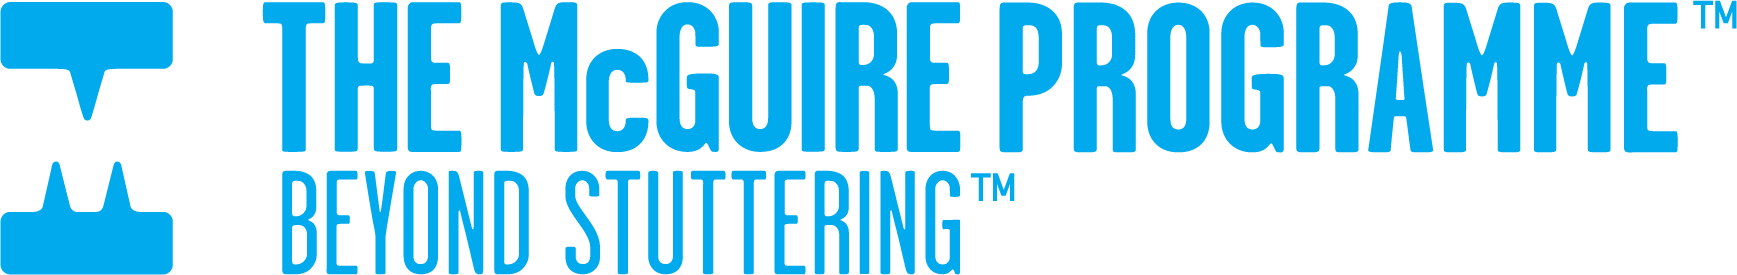 McGuire Programme Blue Logo